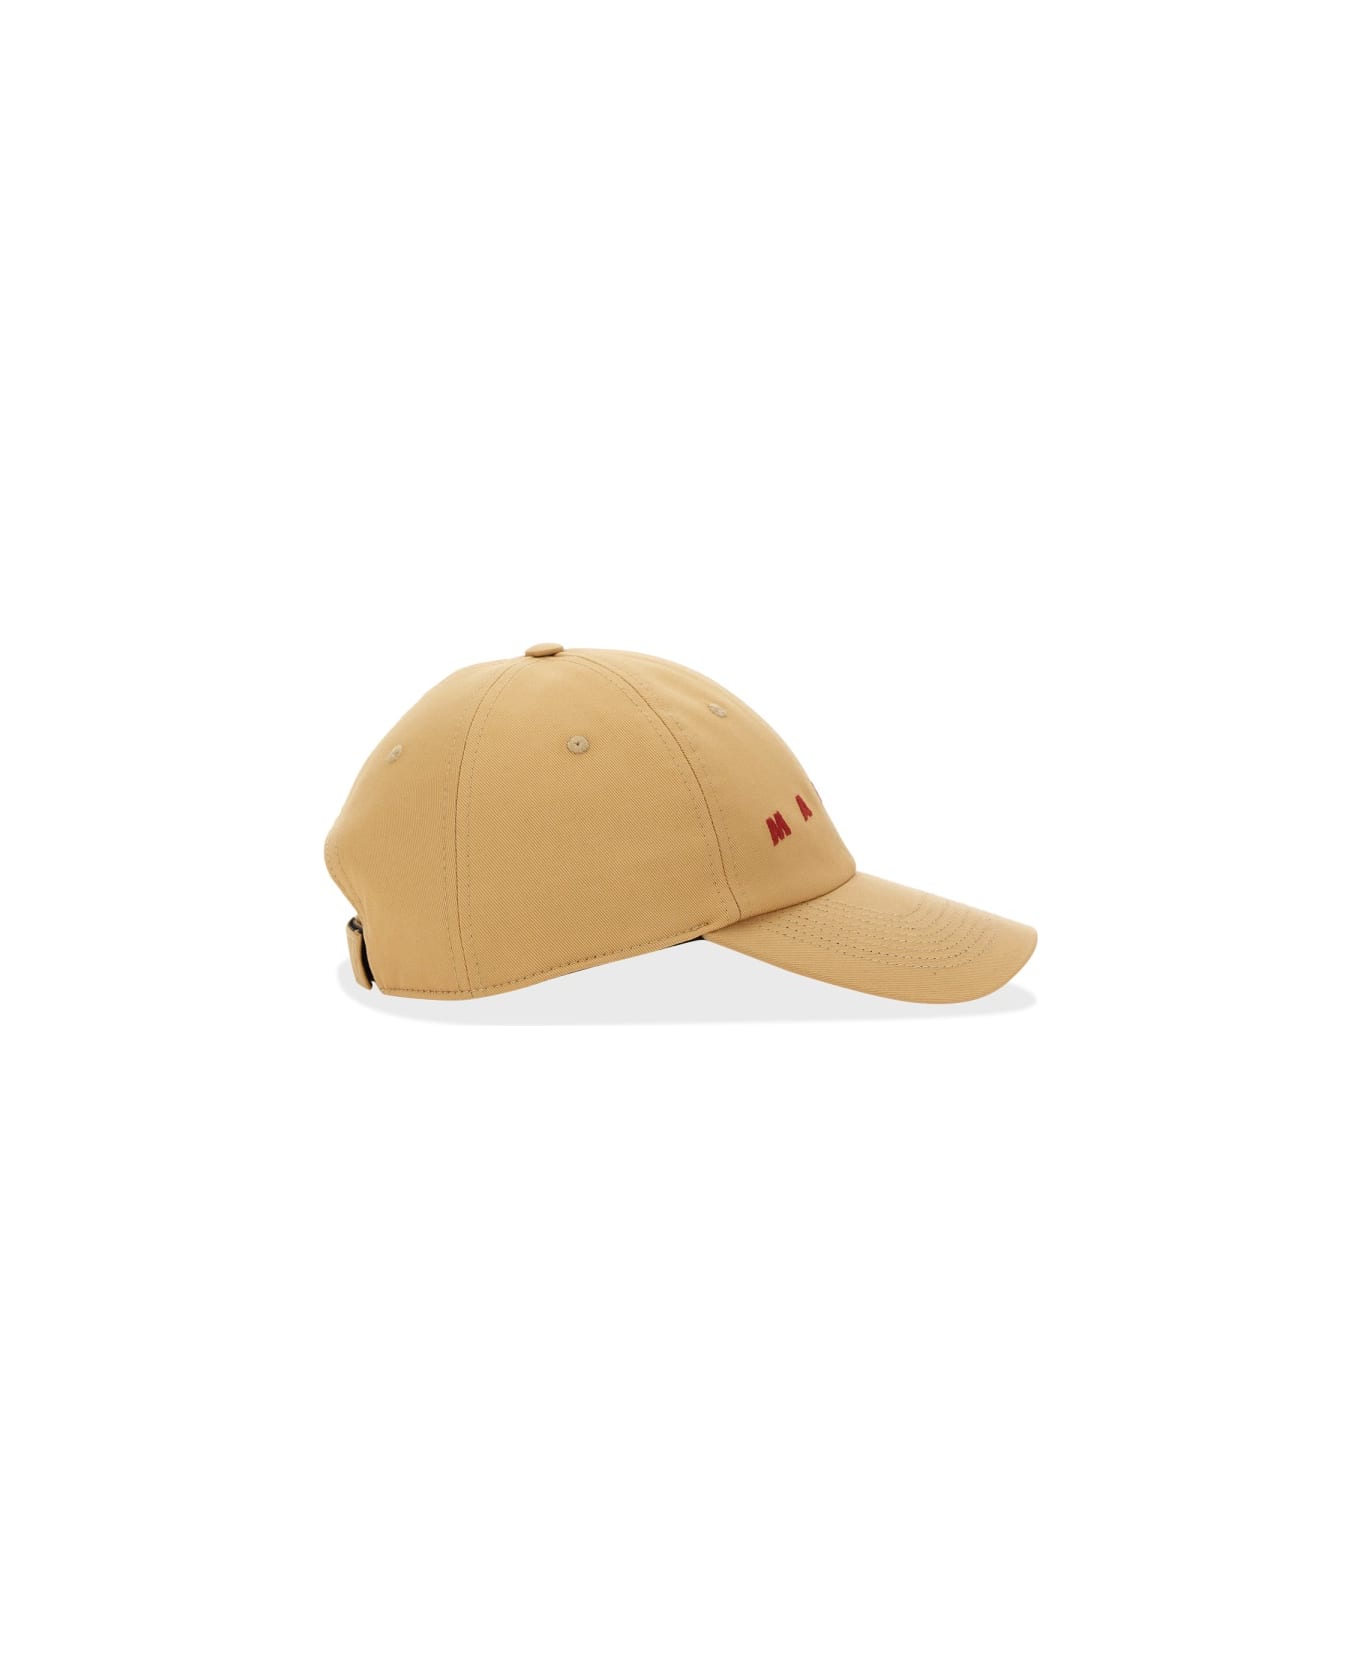 Marni Baseball Hat With Logo